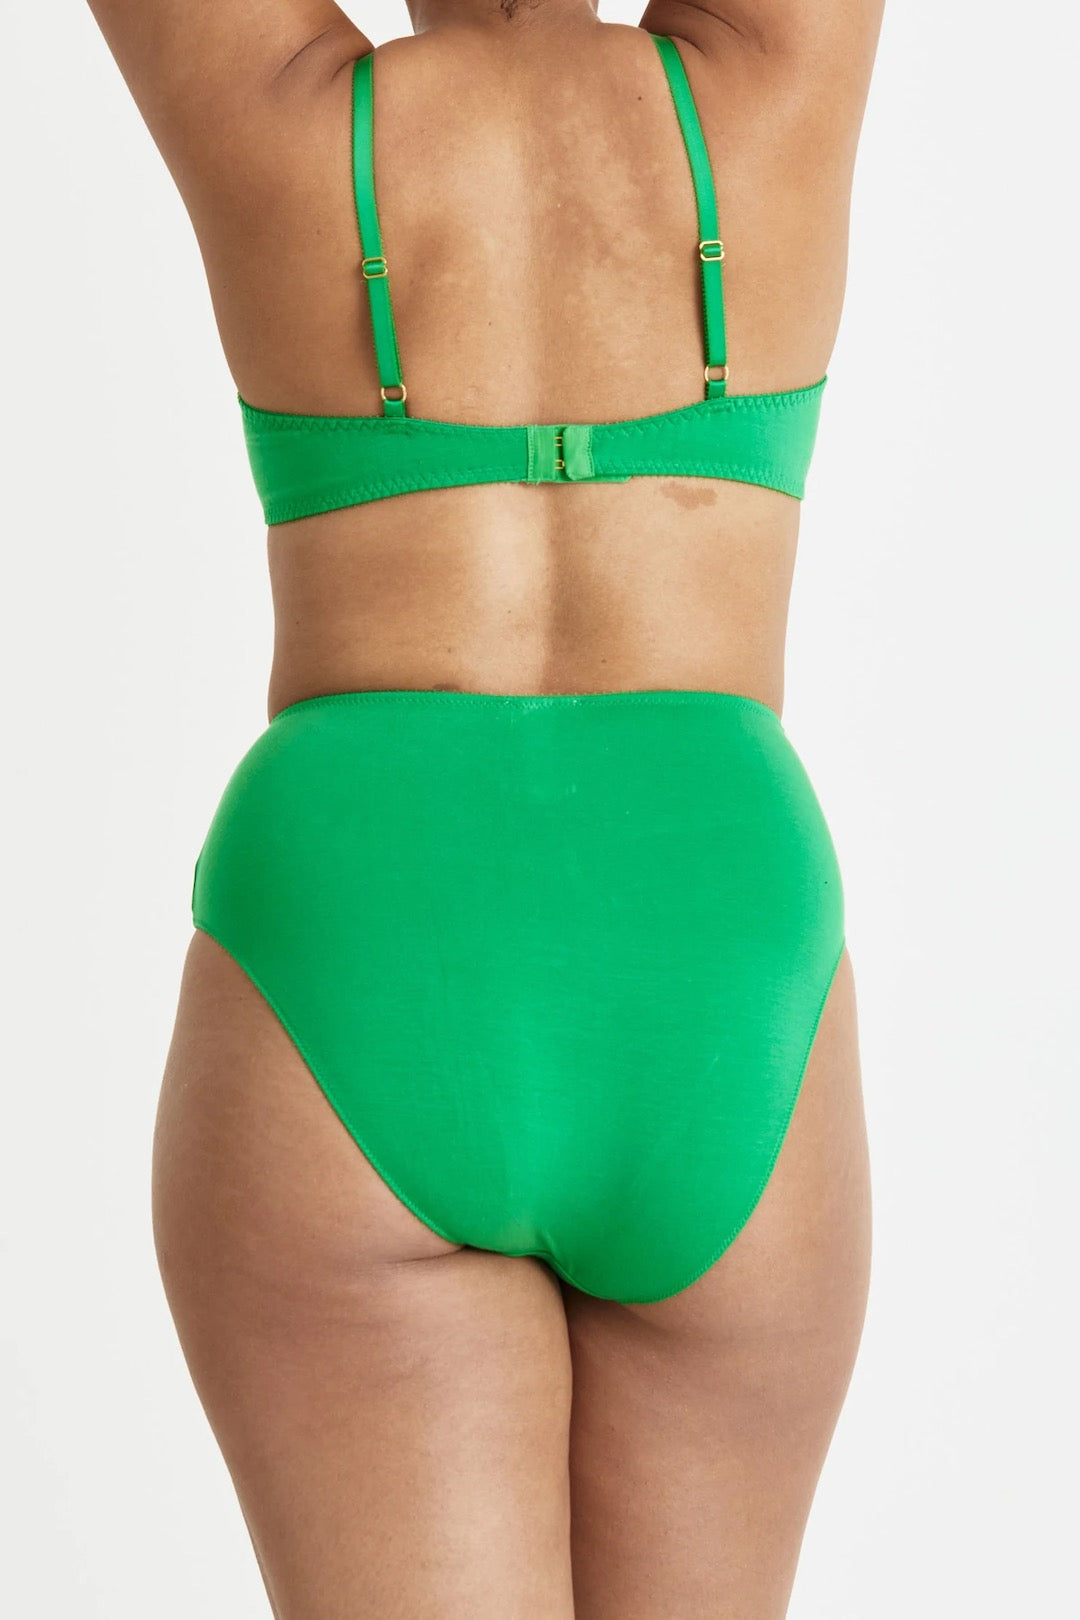 The back view of a woman in a green Angela Bra – Poise bikini by Videris.